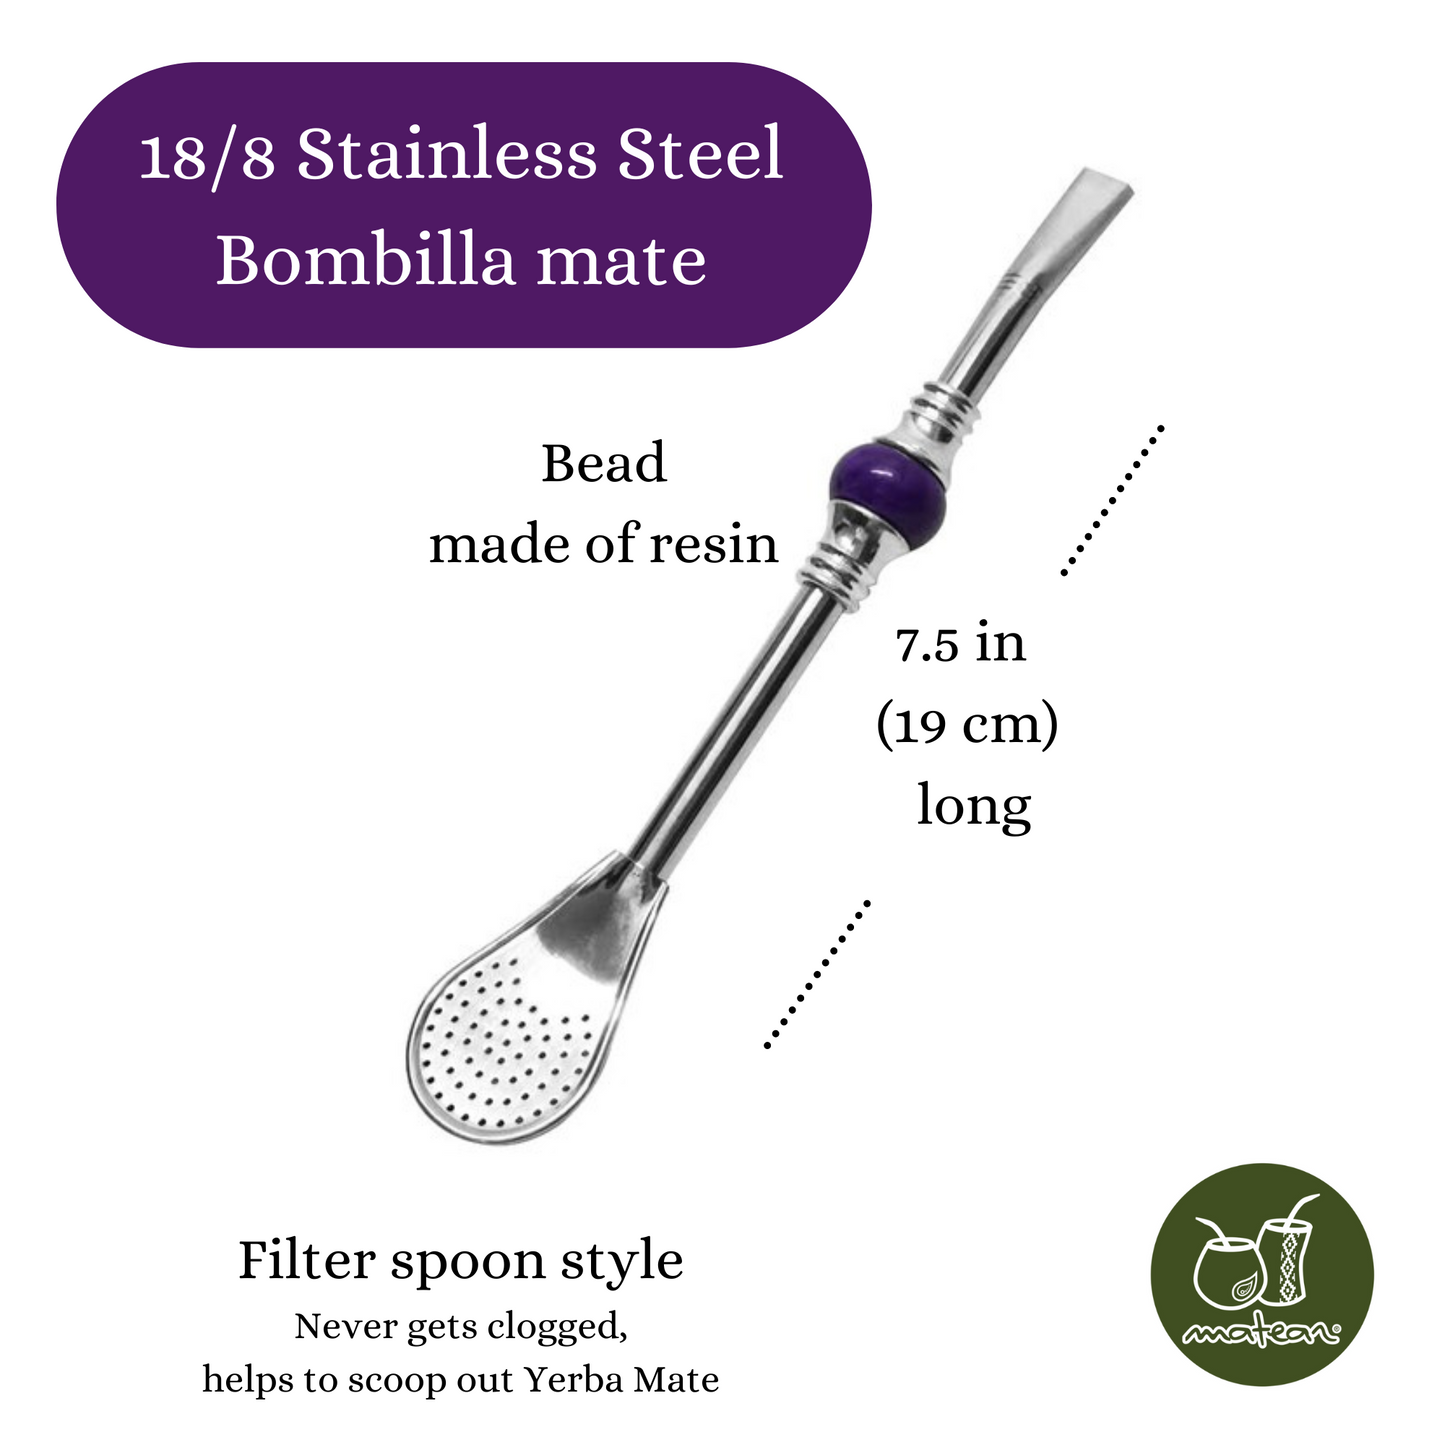 Stainless steel Bombilla to drink Yerba Mate | Stylish resin bead & ergonomic design | 7.5 in / 19 cm Long